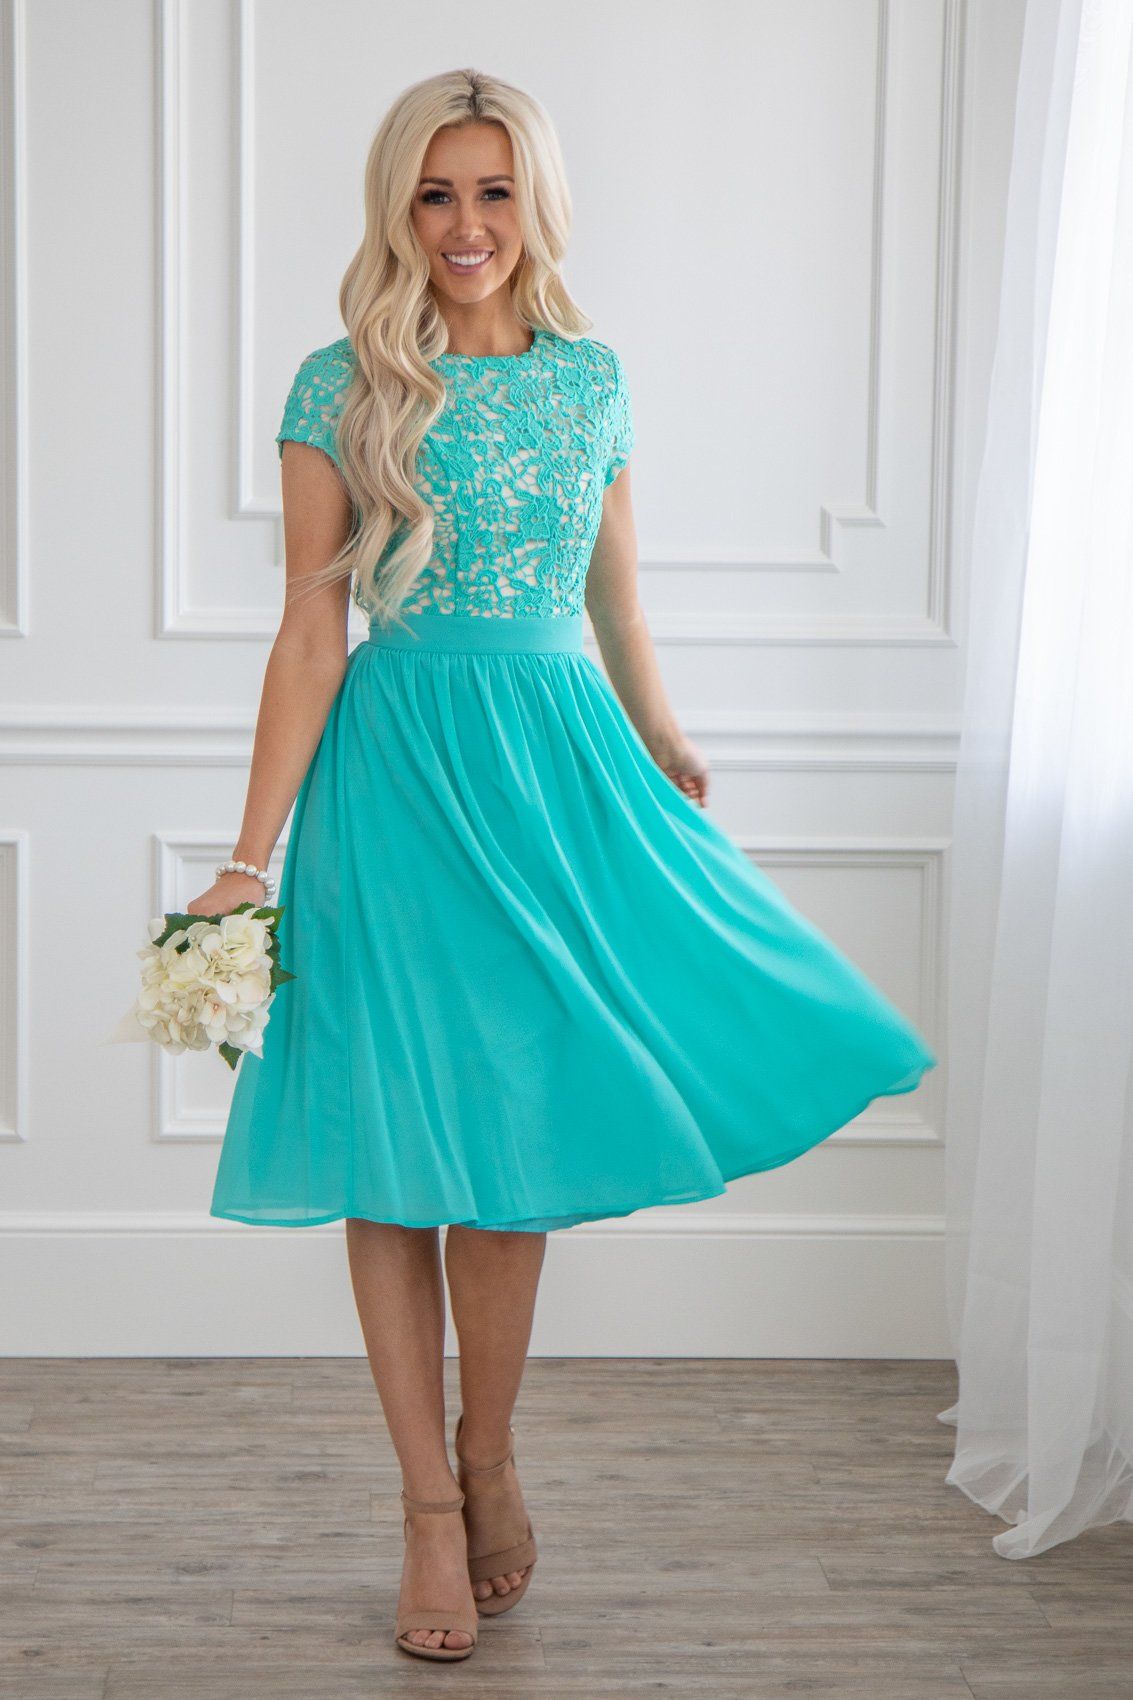 How To Style Aqua Blue Dress